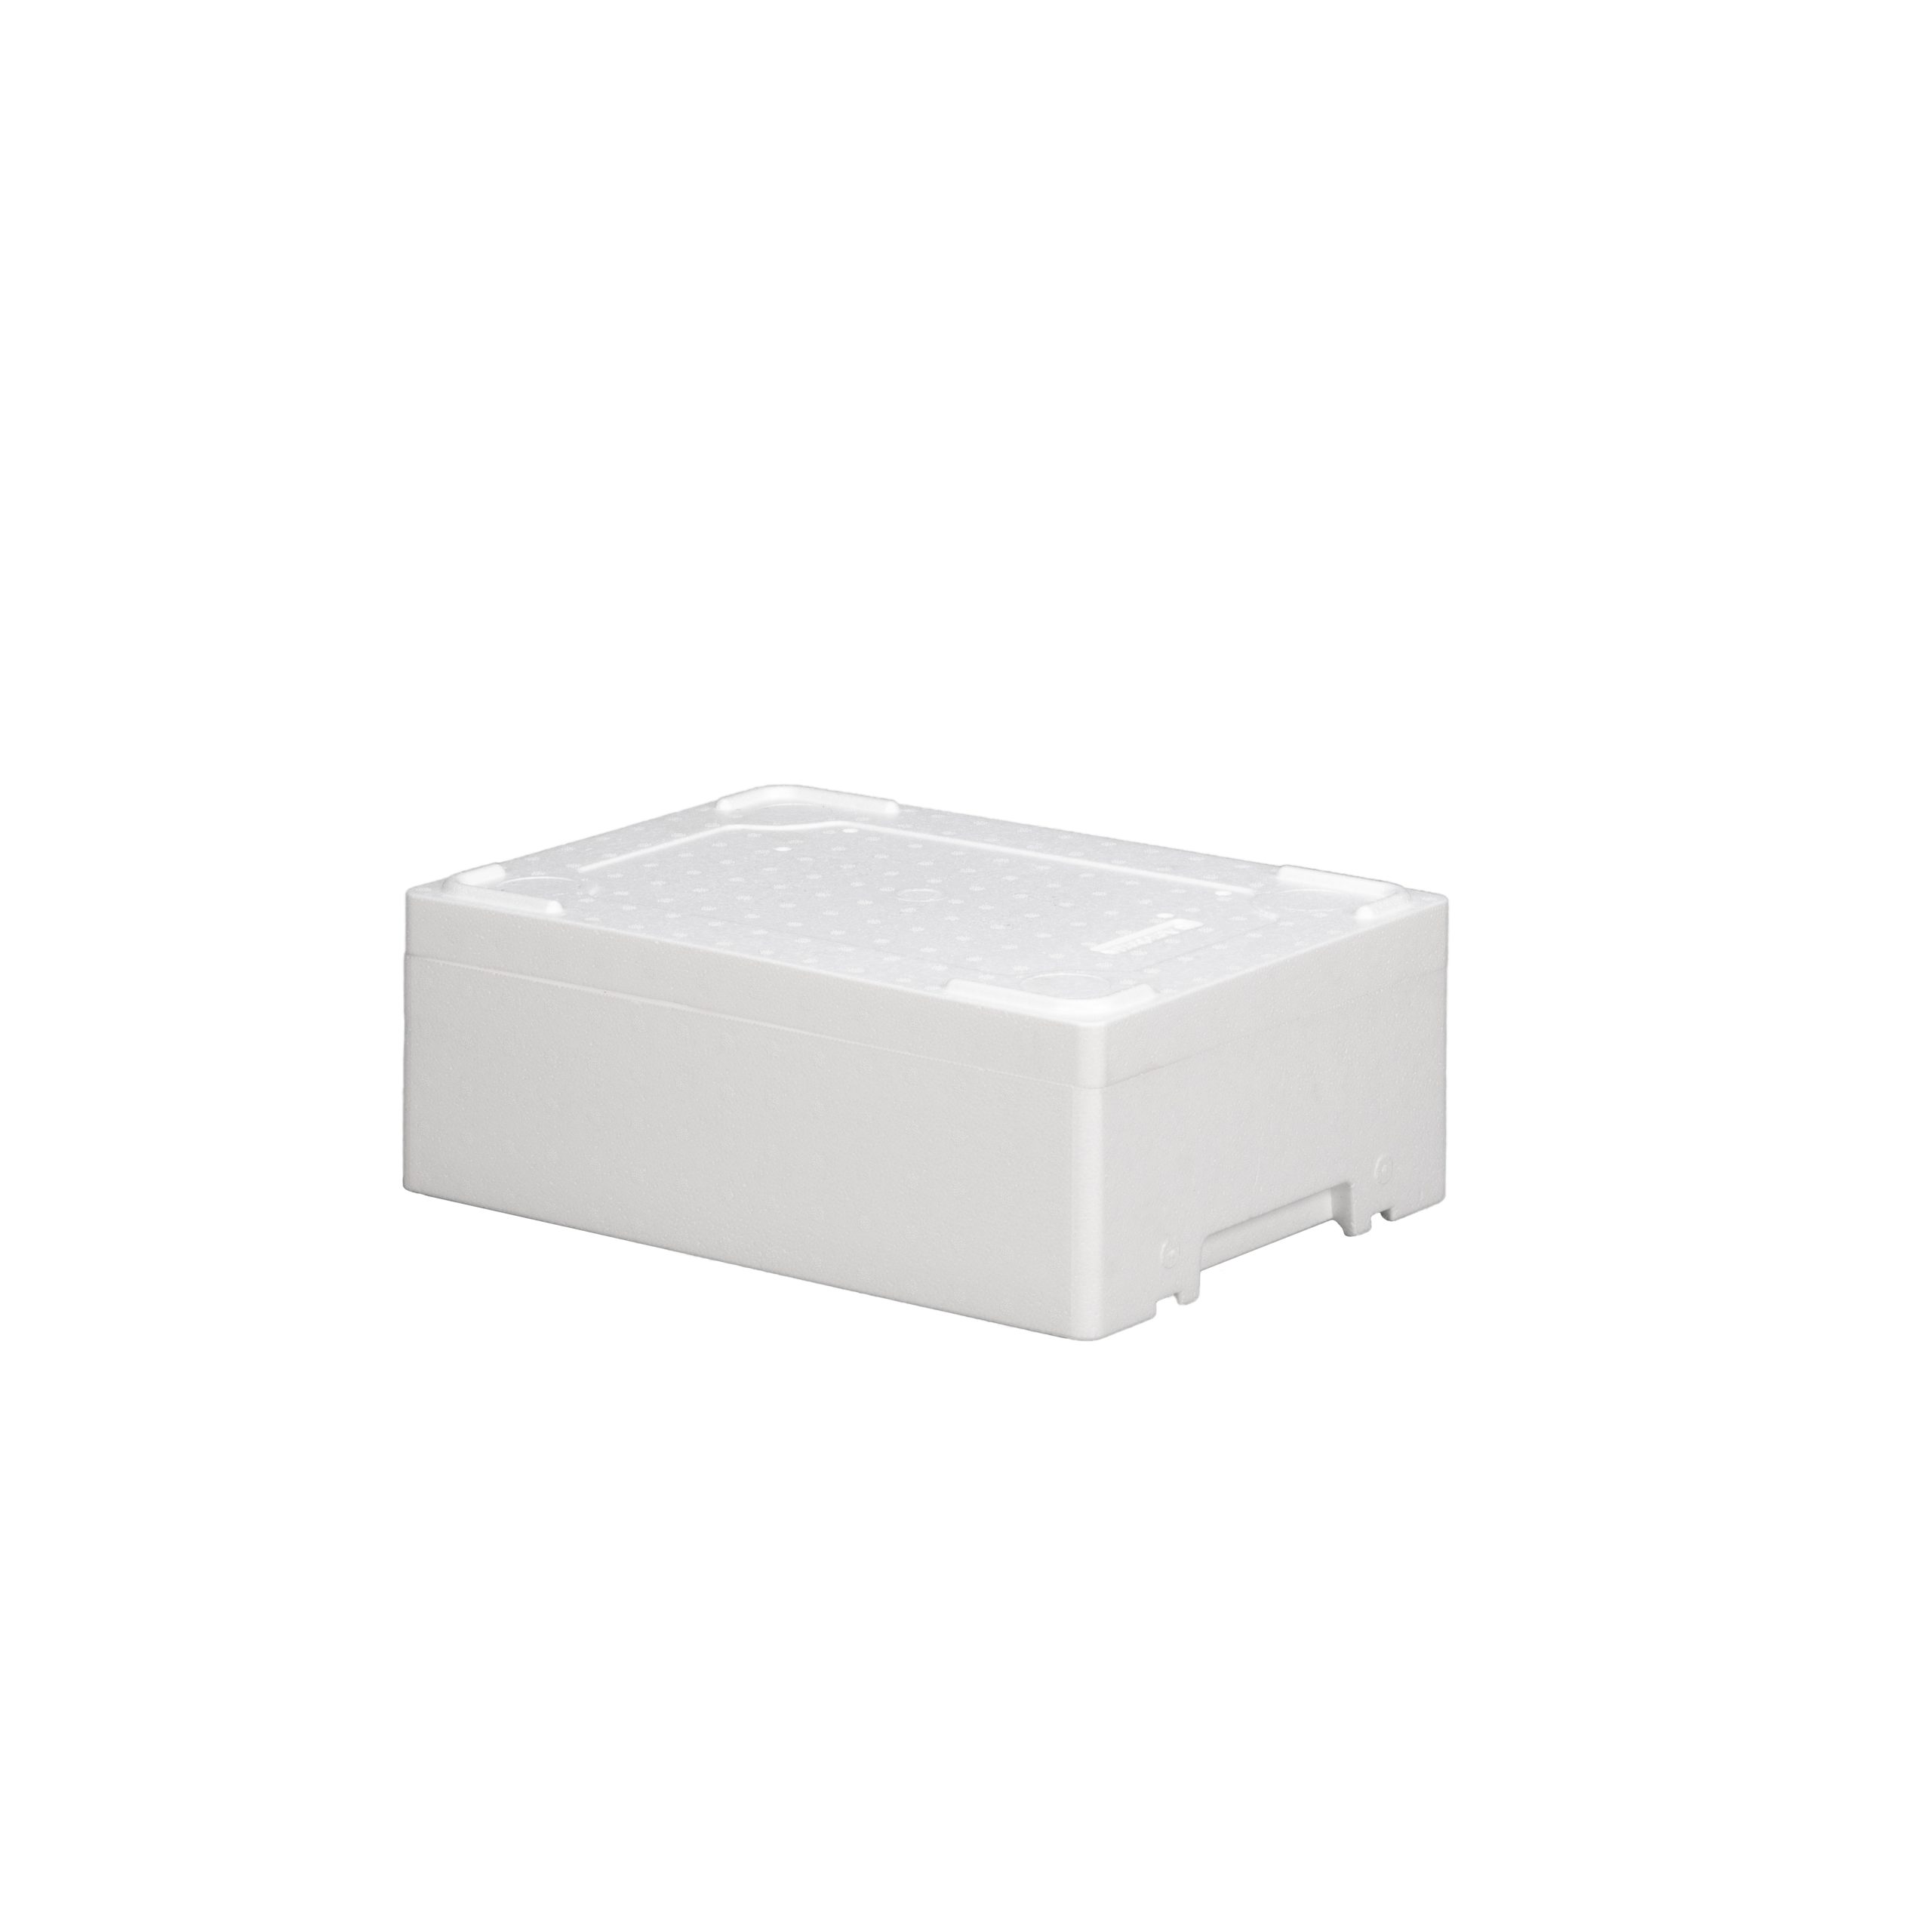 Insulated Box – 358 x 259 x 120mm